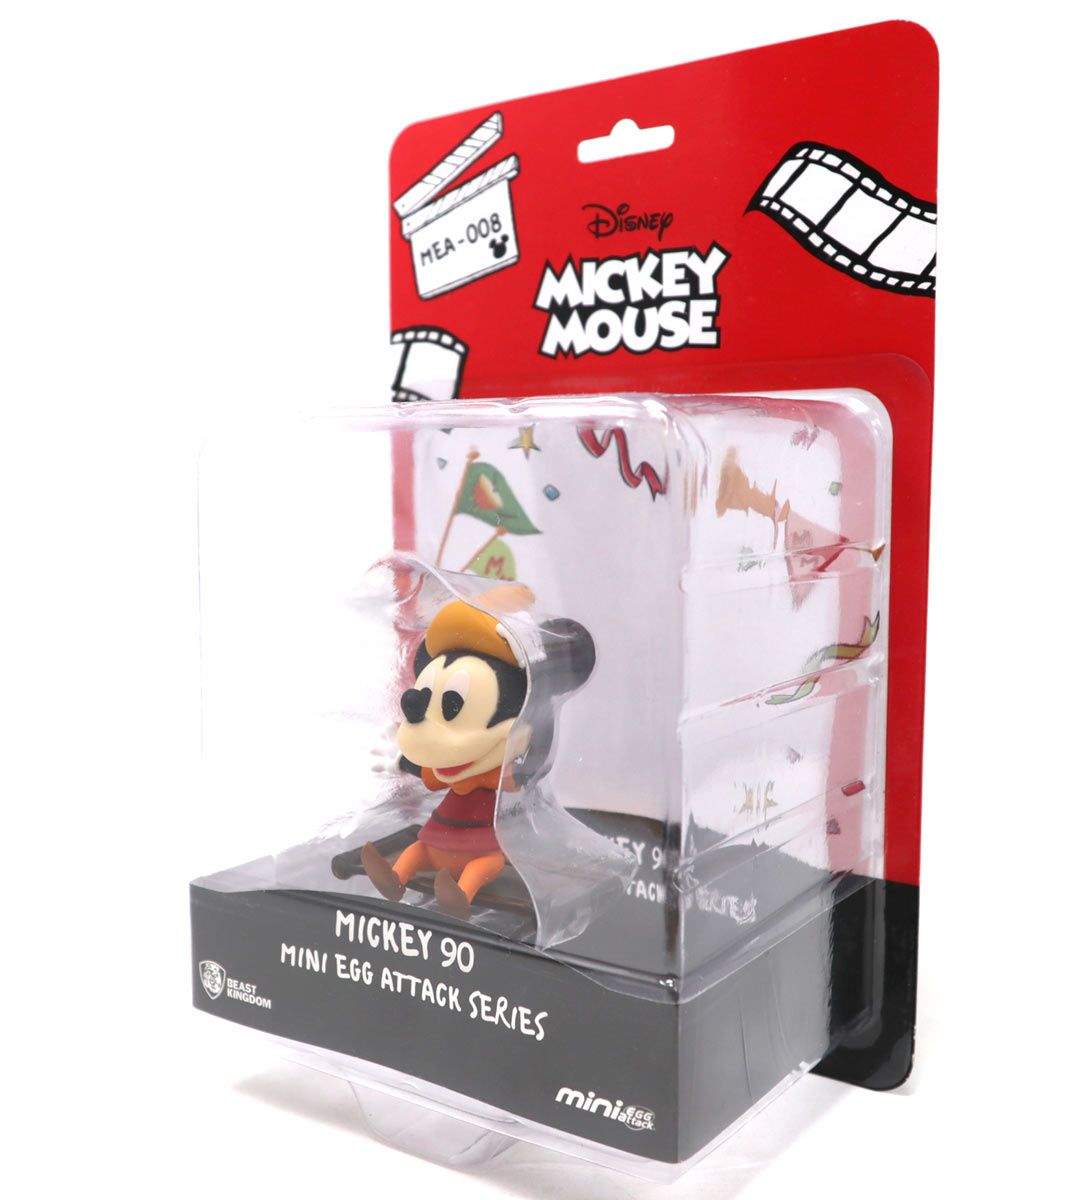 Mini Egg Attack Series - Robinhood Mickey 90 (Mickey Mouse)